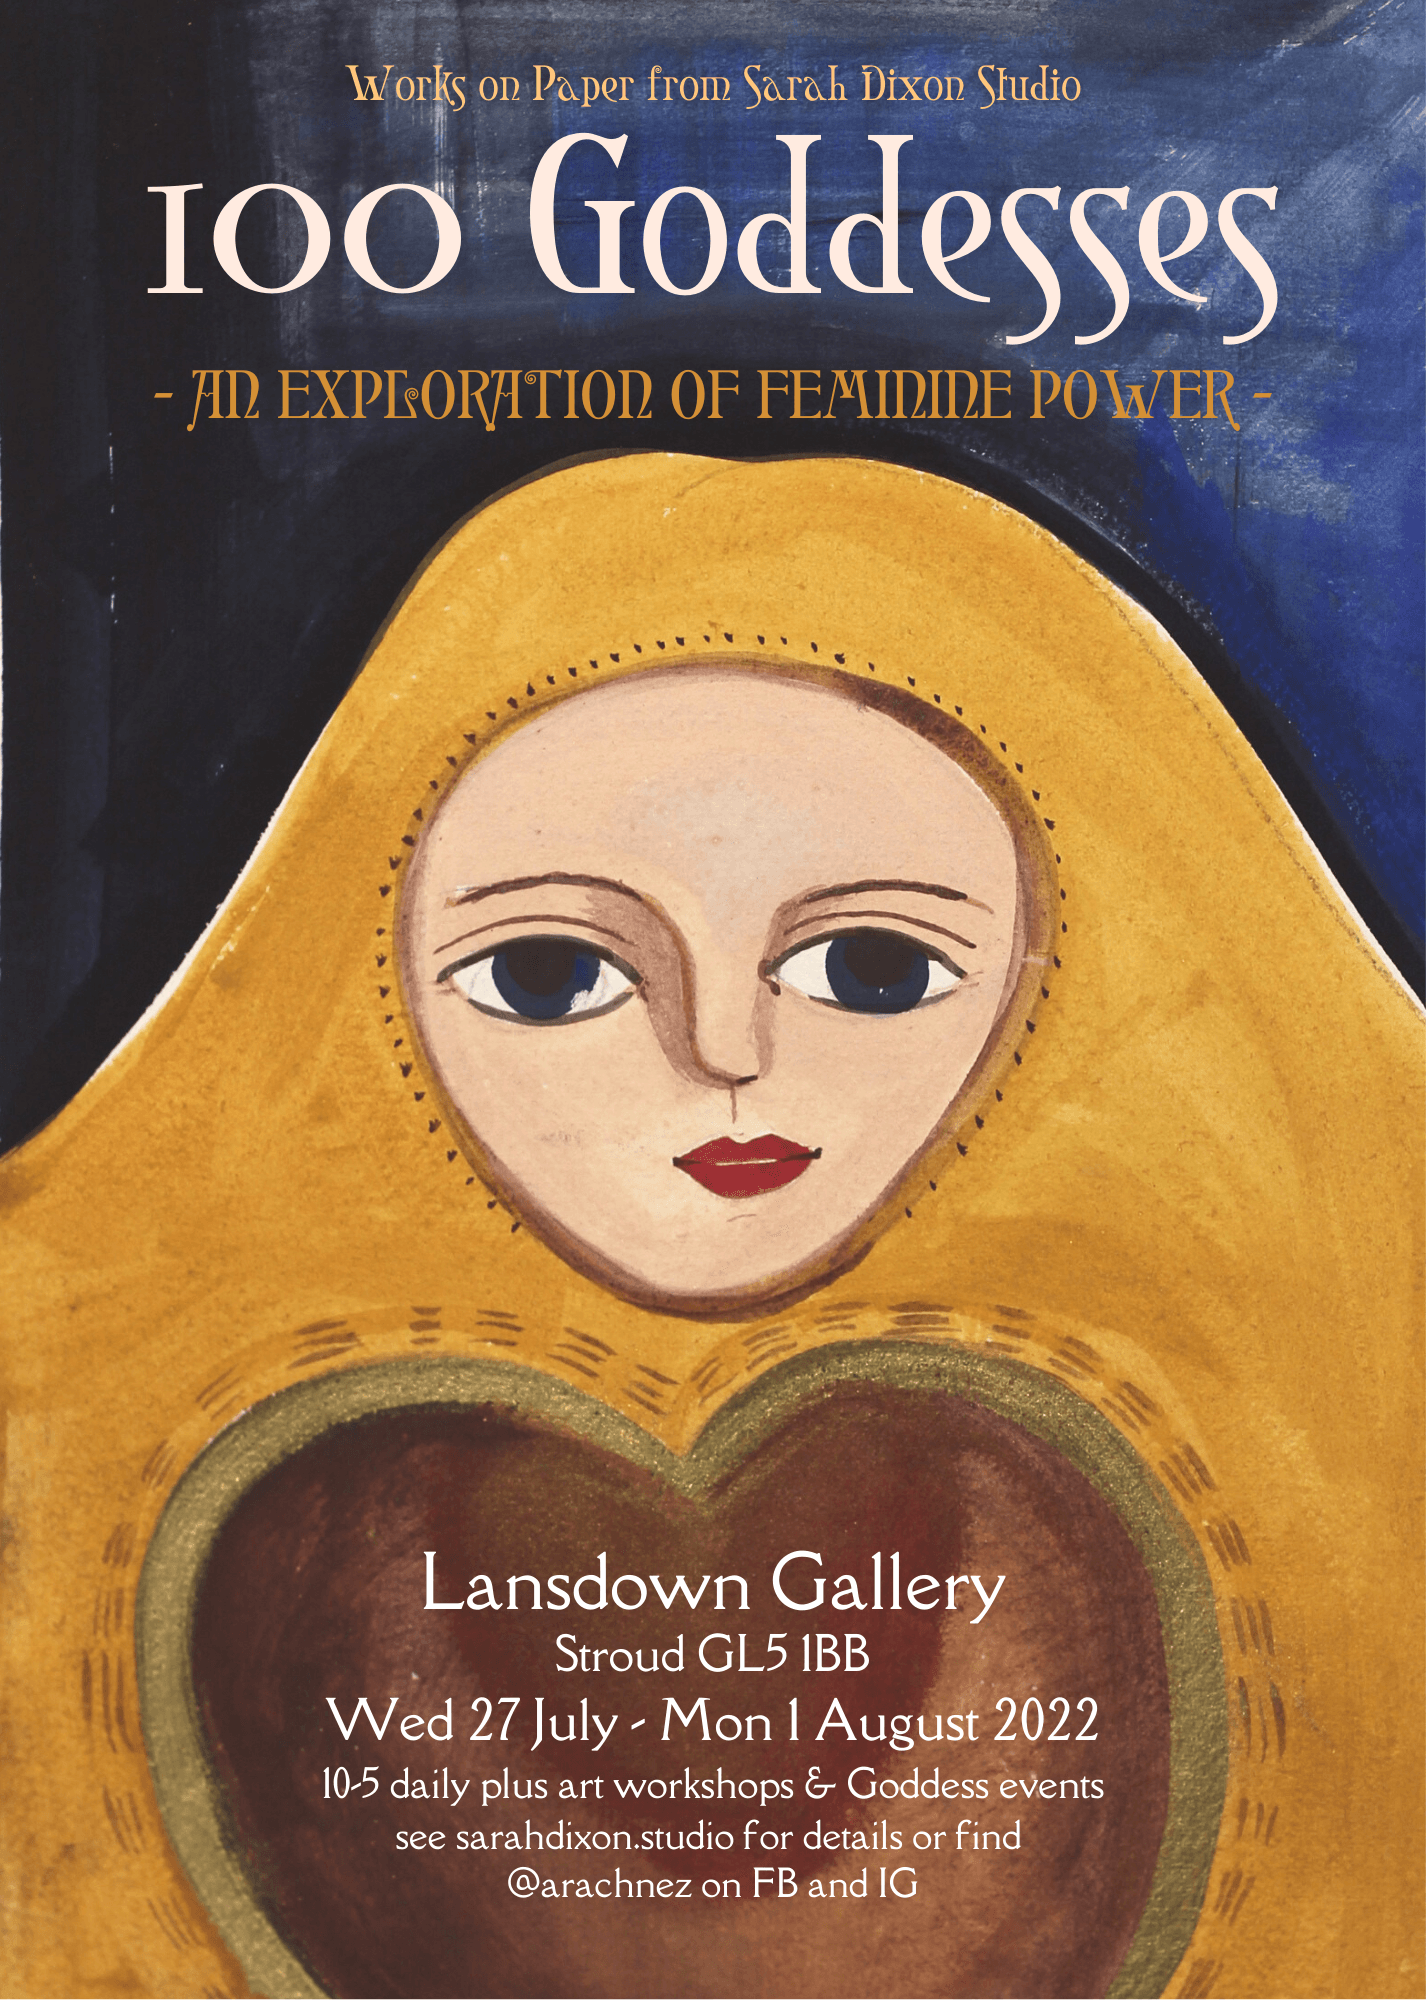 100 Goddesses Show at Lansdown Gallery